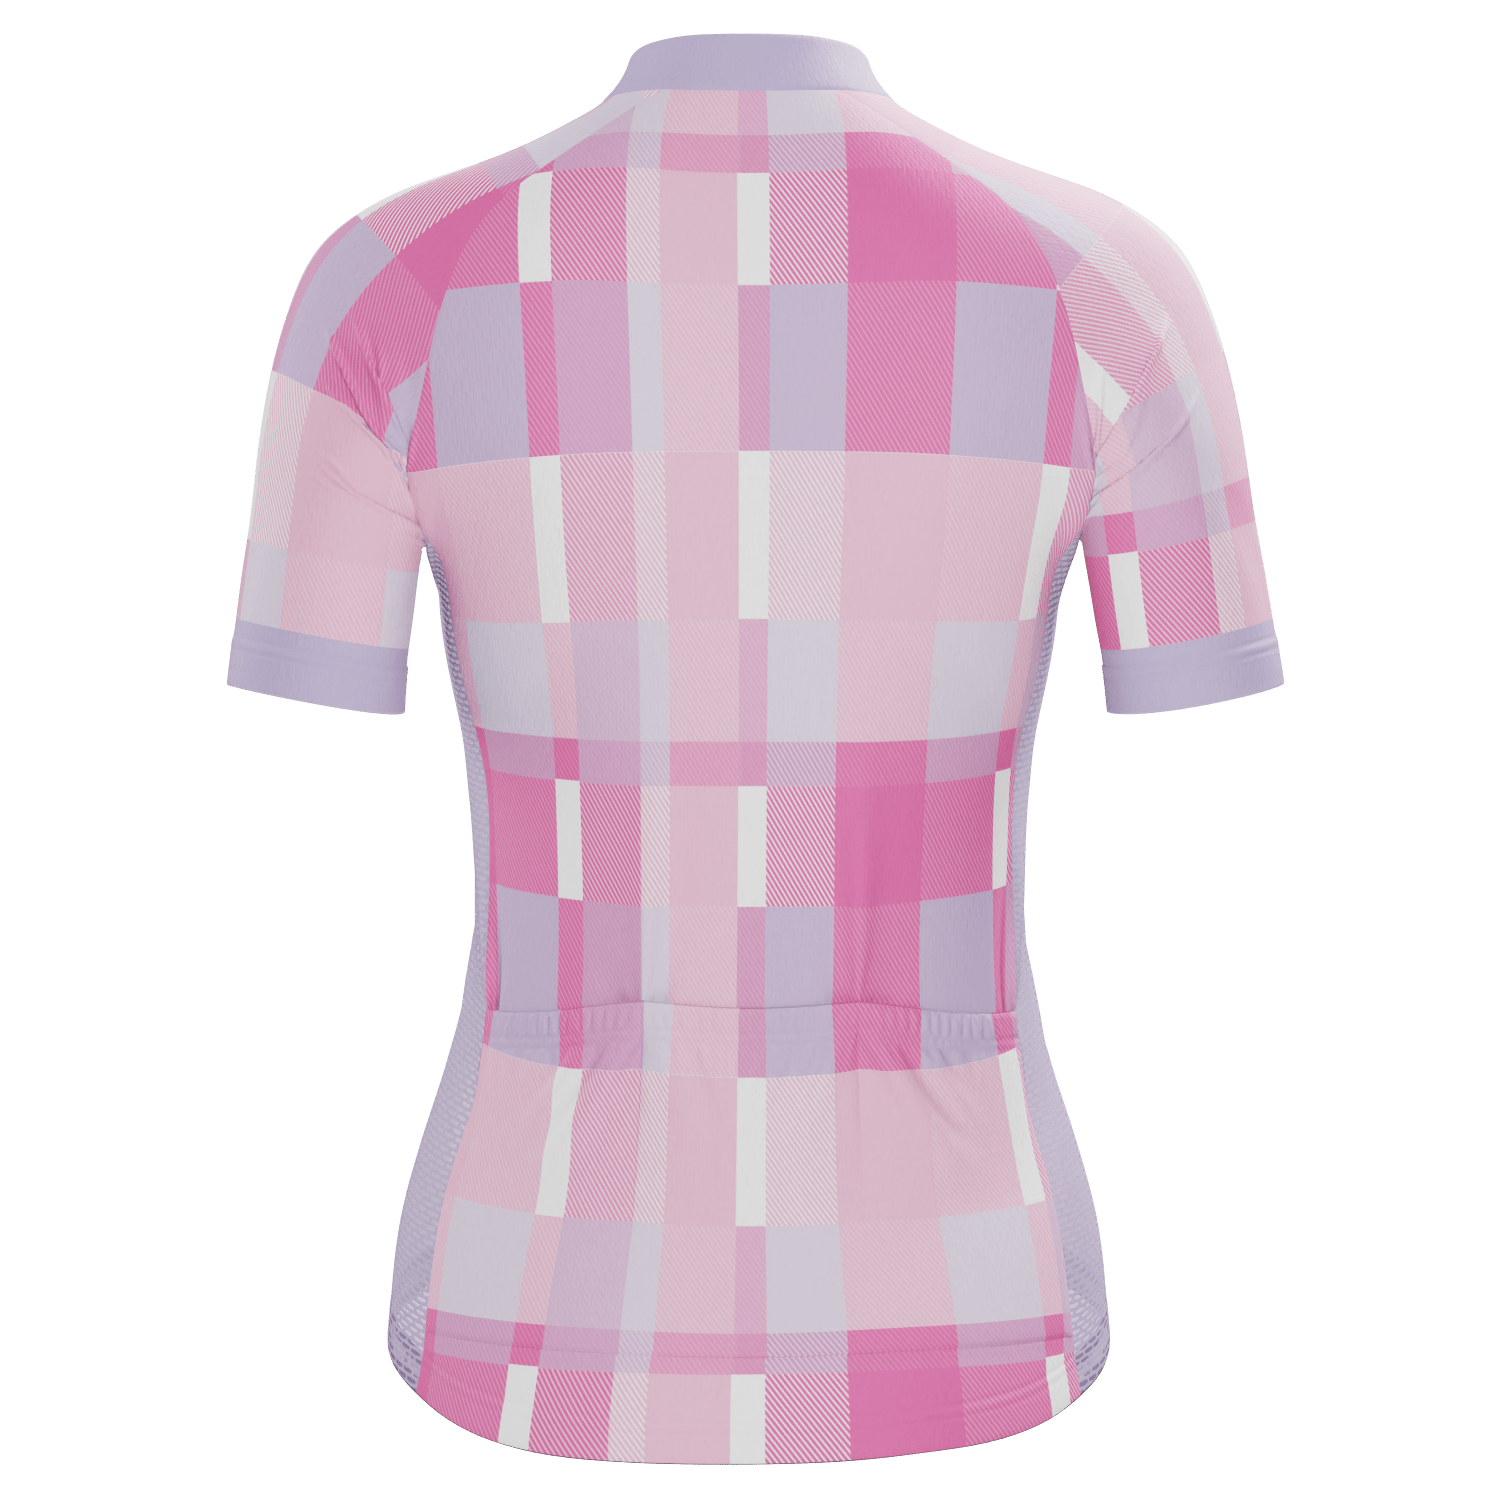 Women's Classic Tartan Short Sleeve Cycling Jersey